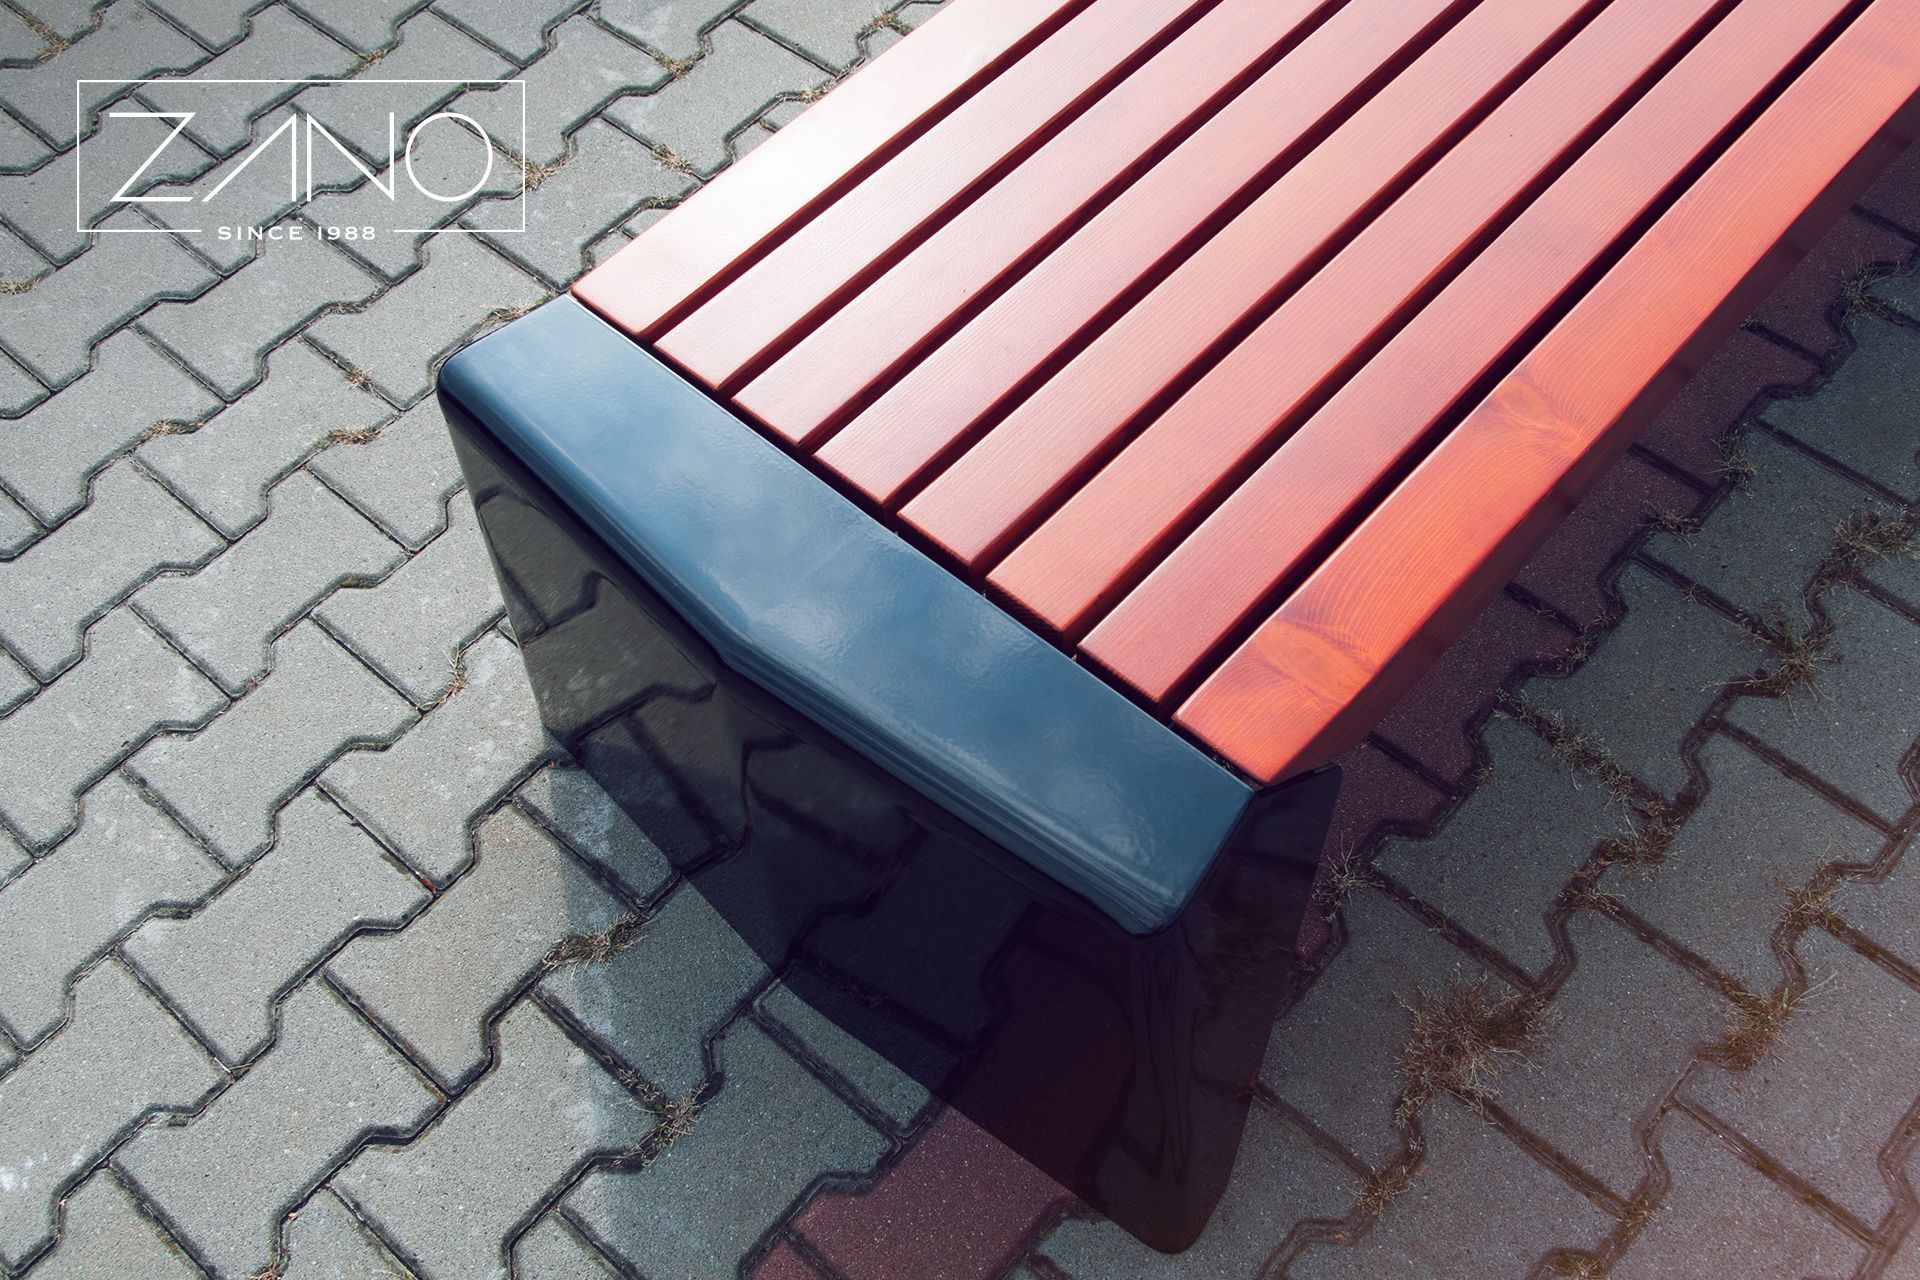 Steel bench with wooden seat - modern design